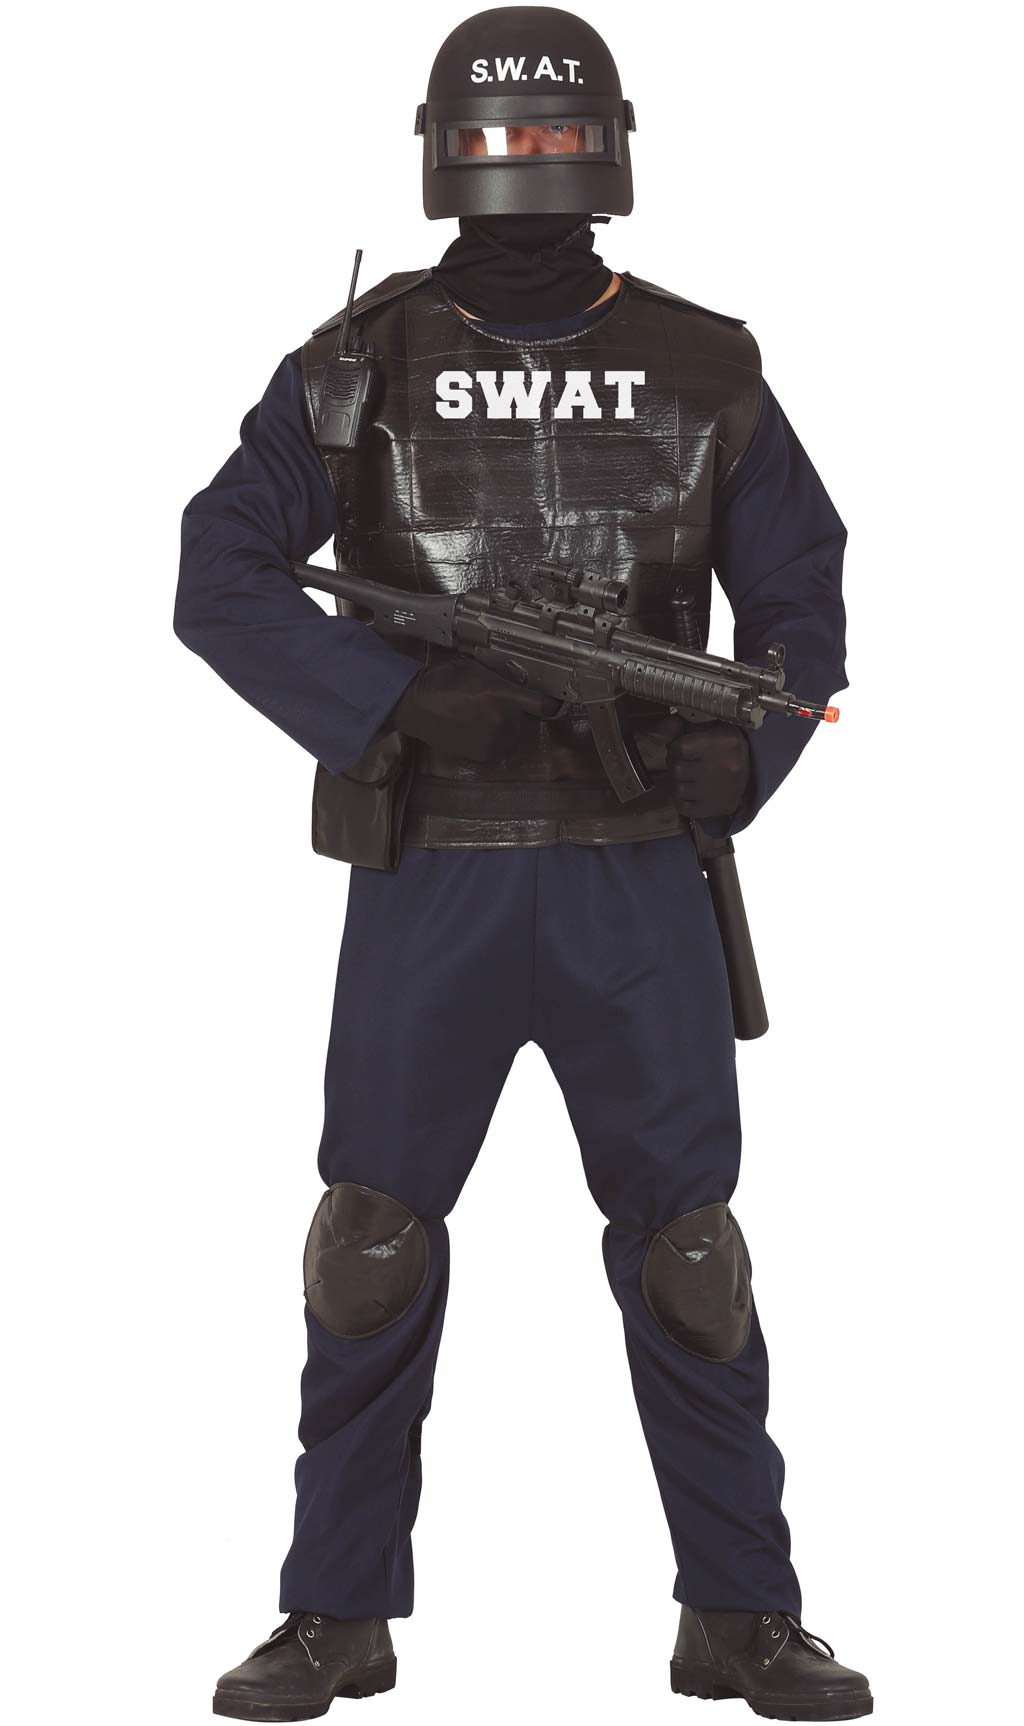 Uomini Swat Costume Halloween Costume Per Adulto S.w.a.t. Polizia Cosplay